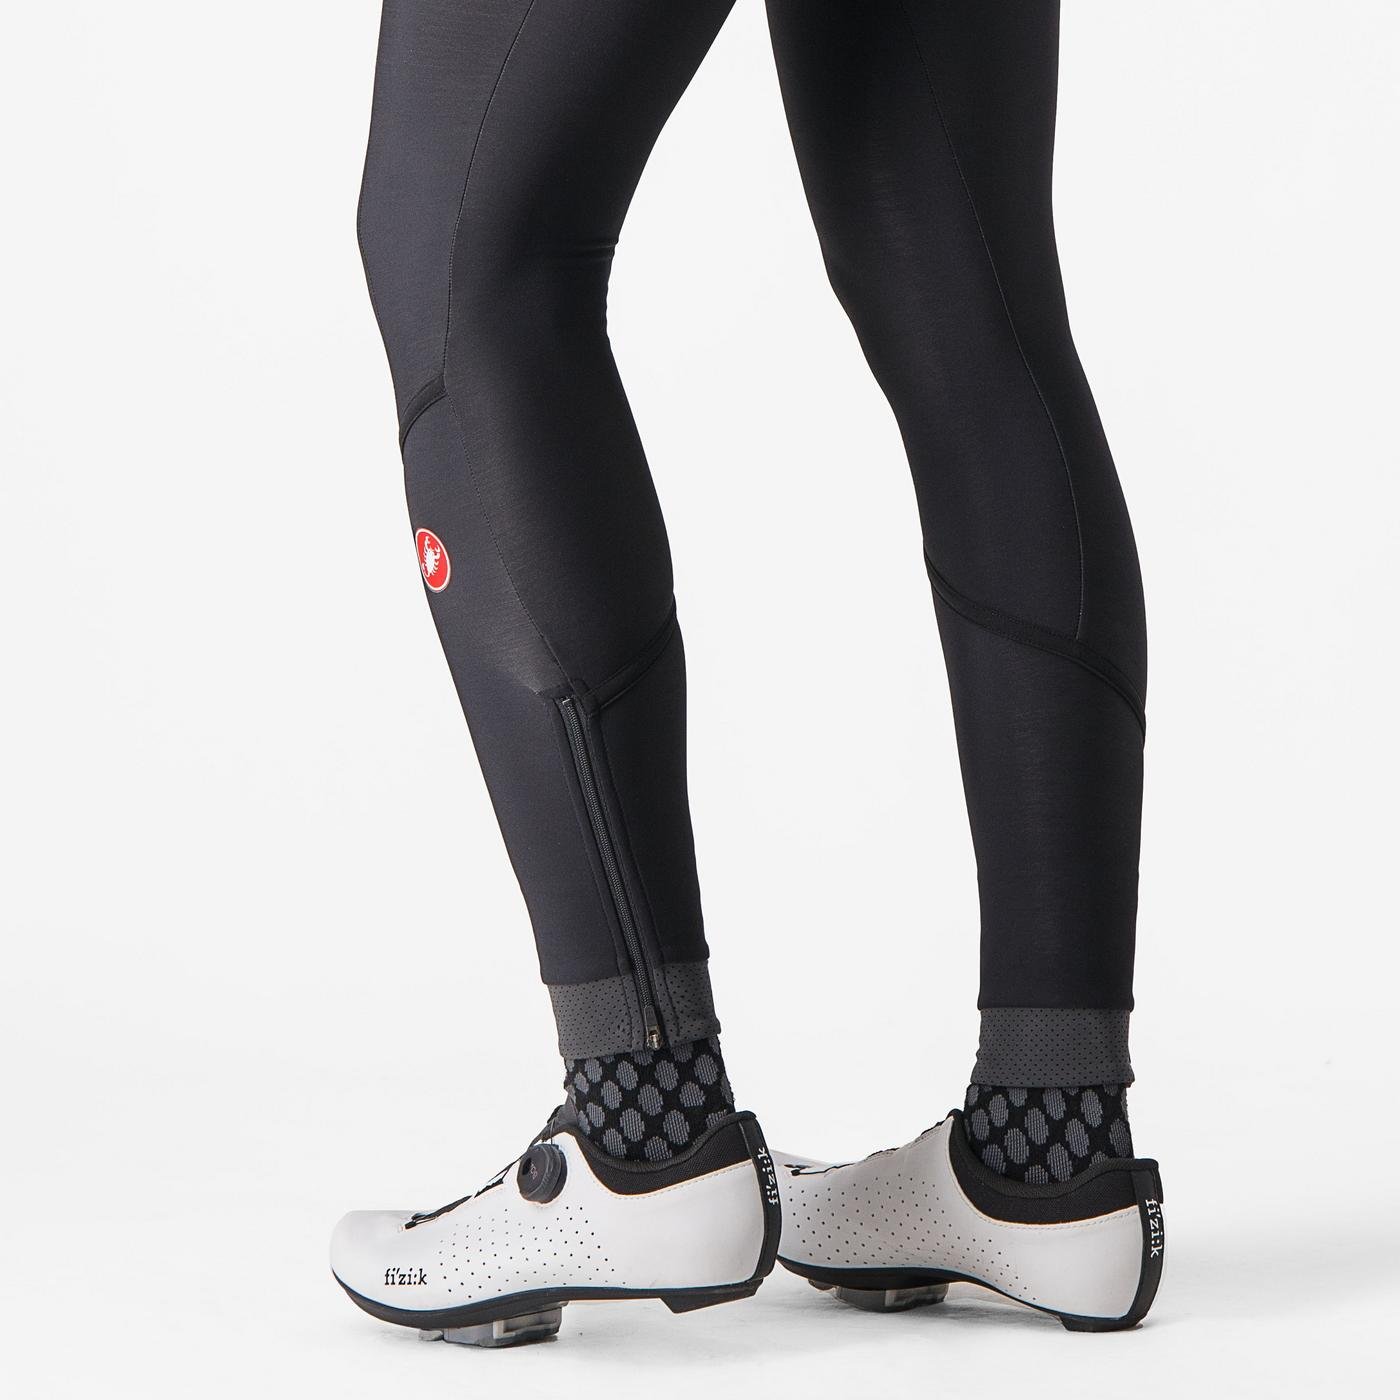 Women's Reflective Tights & Leggings. Nike FI